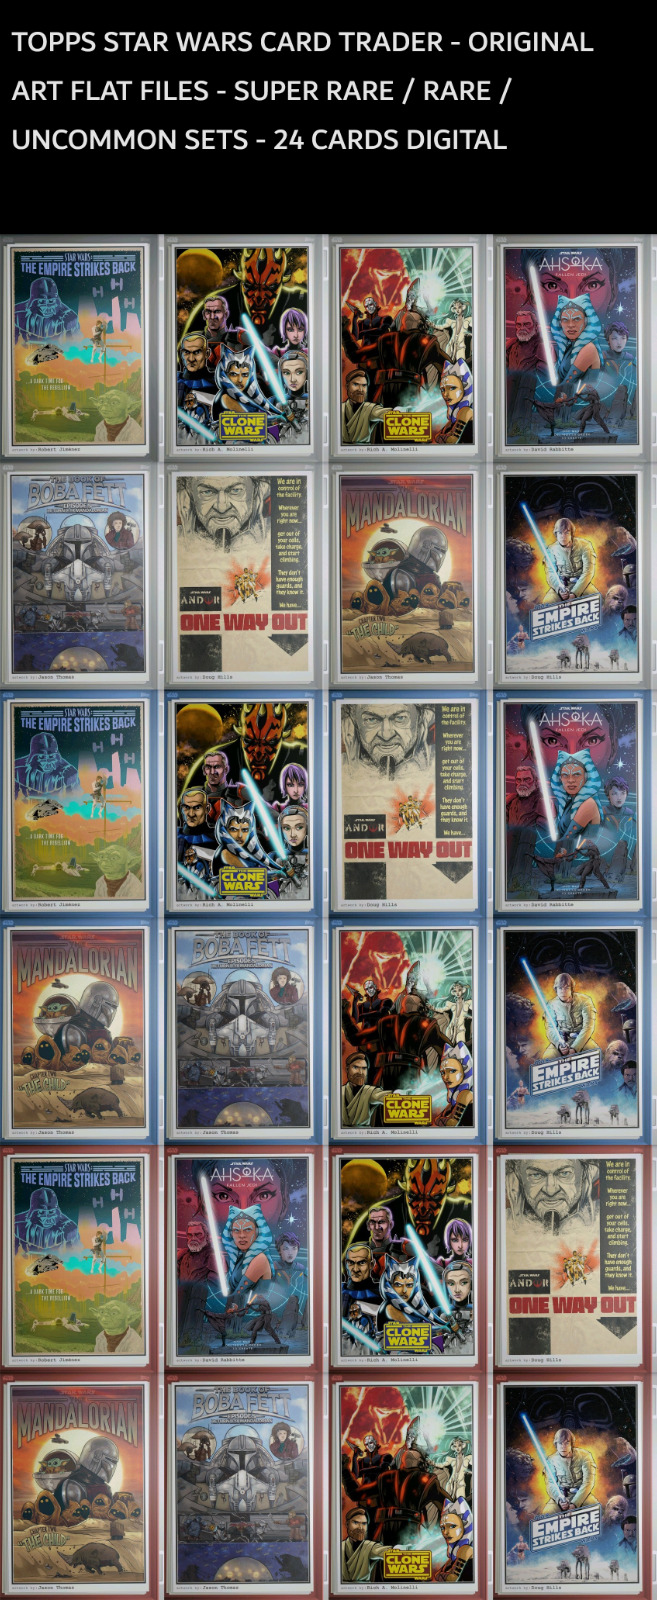 Topps Star Wars Card Trader Original Art Flat Files SR/Rare/Uncommon Set Digital